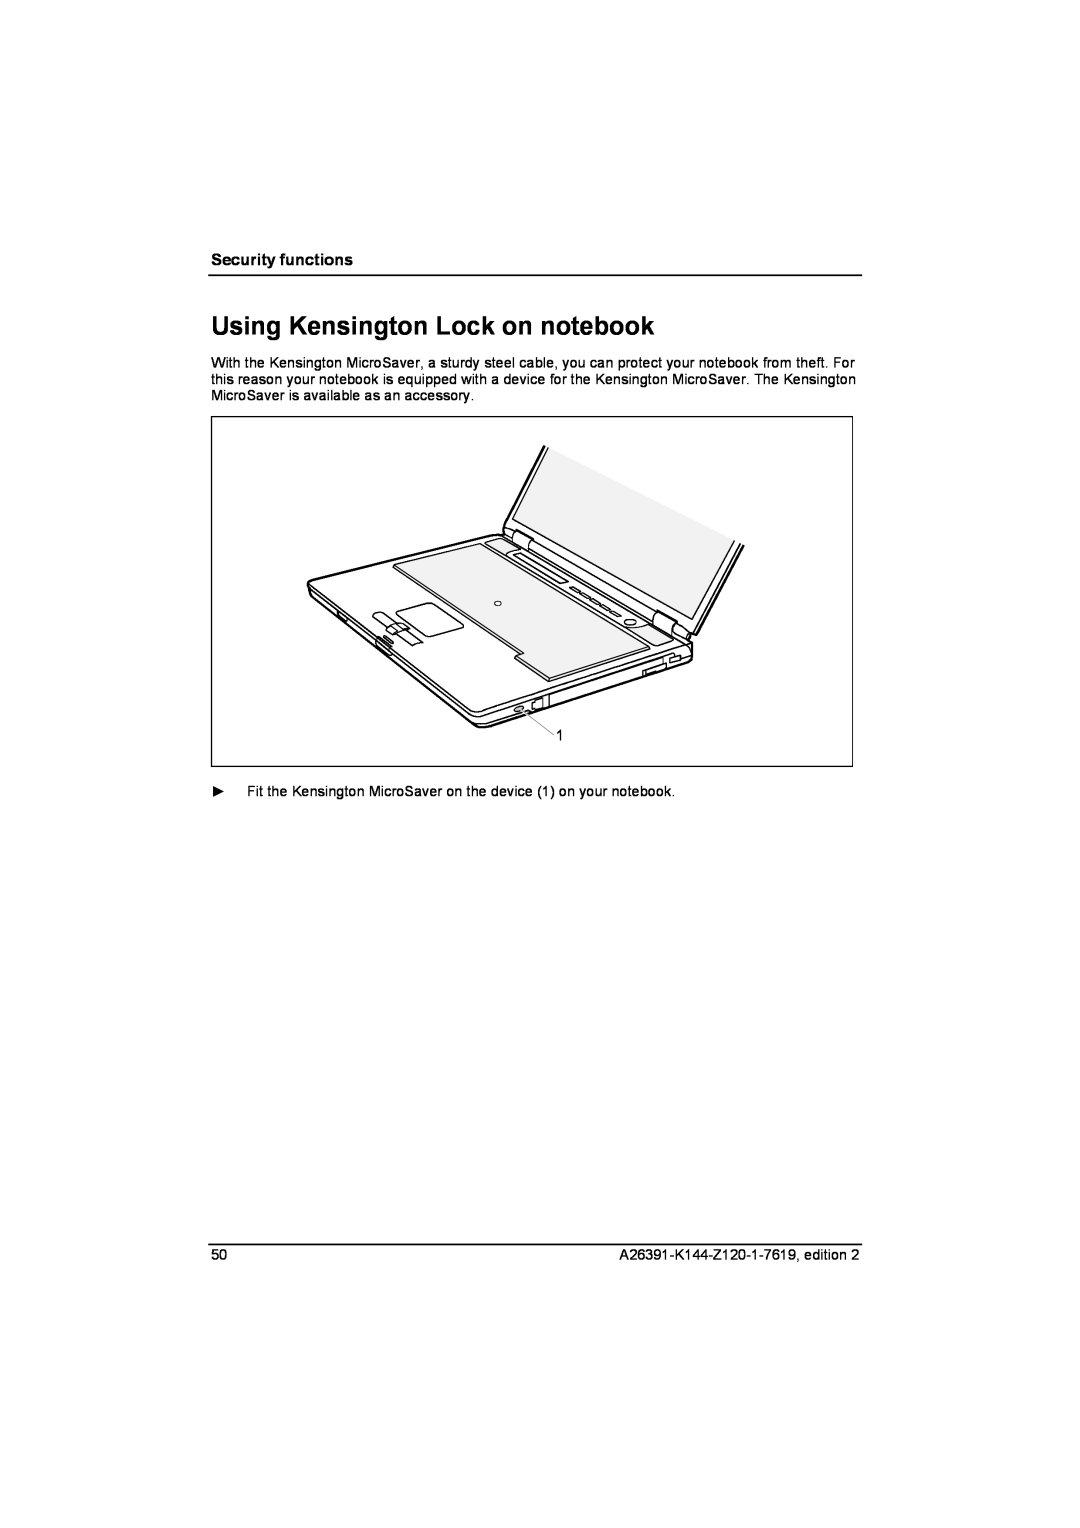 Fujitsu S SERIES manual Using Kensington Lock on notebook, Security functions, A26391-K144-Z120-1-7619, edition 